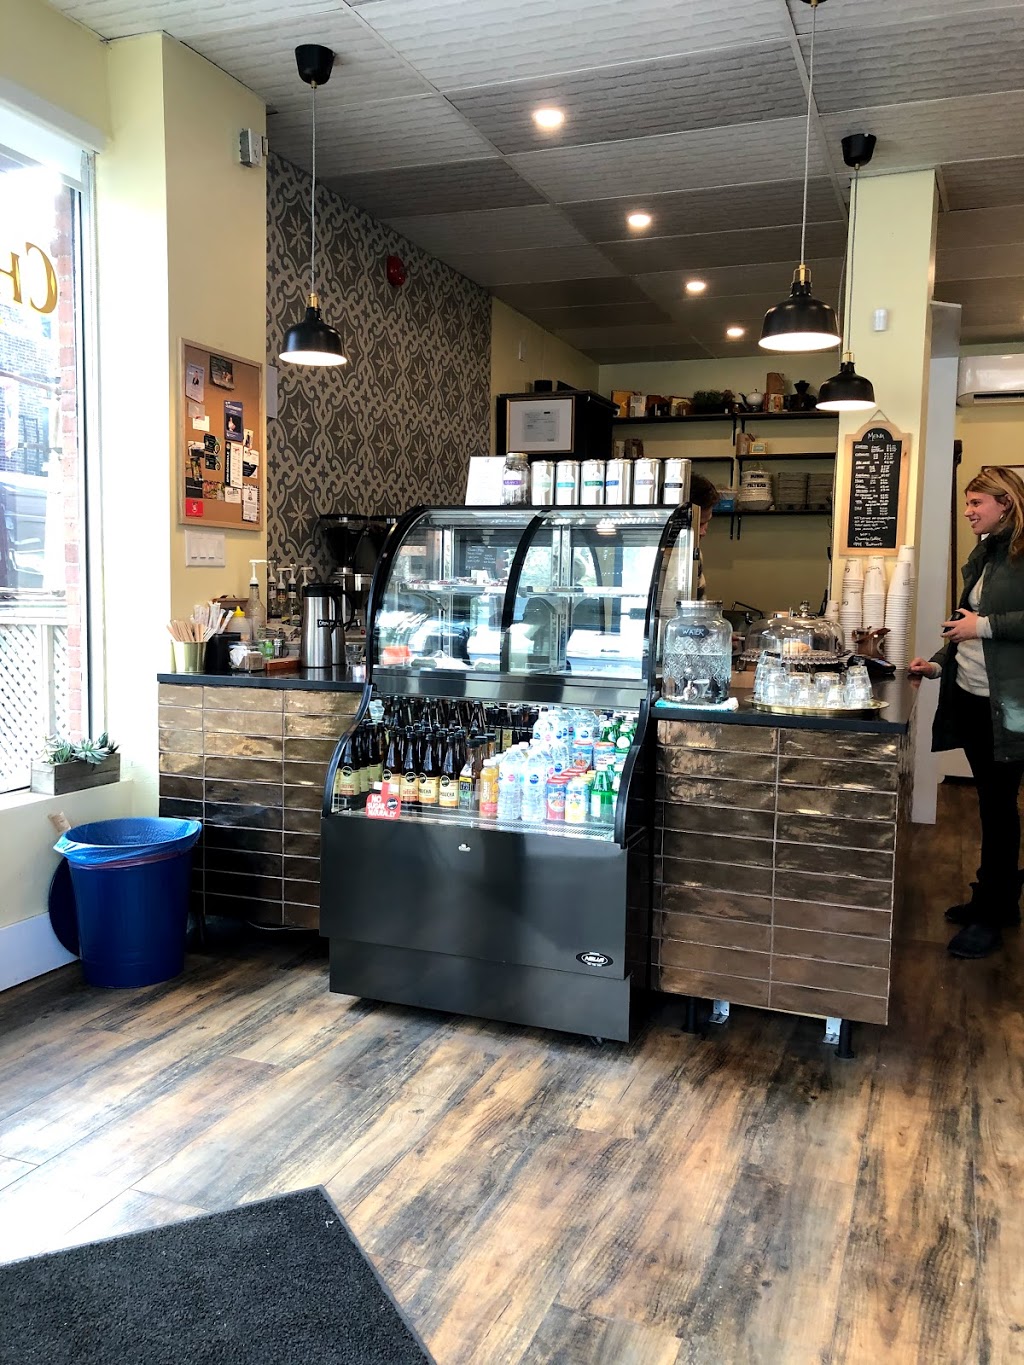 Chaveta Coffee | cafe | 994 Bathurst St, Toronto, ON M5R 3G7, Canada | 4165349918 OR +1 416-534-9918